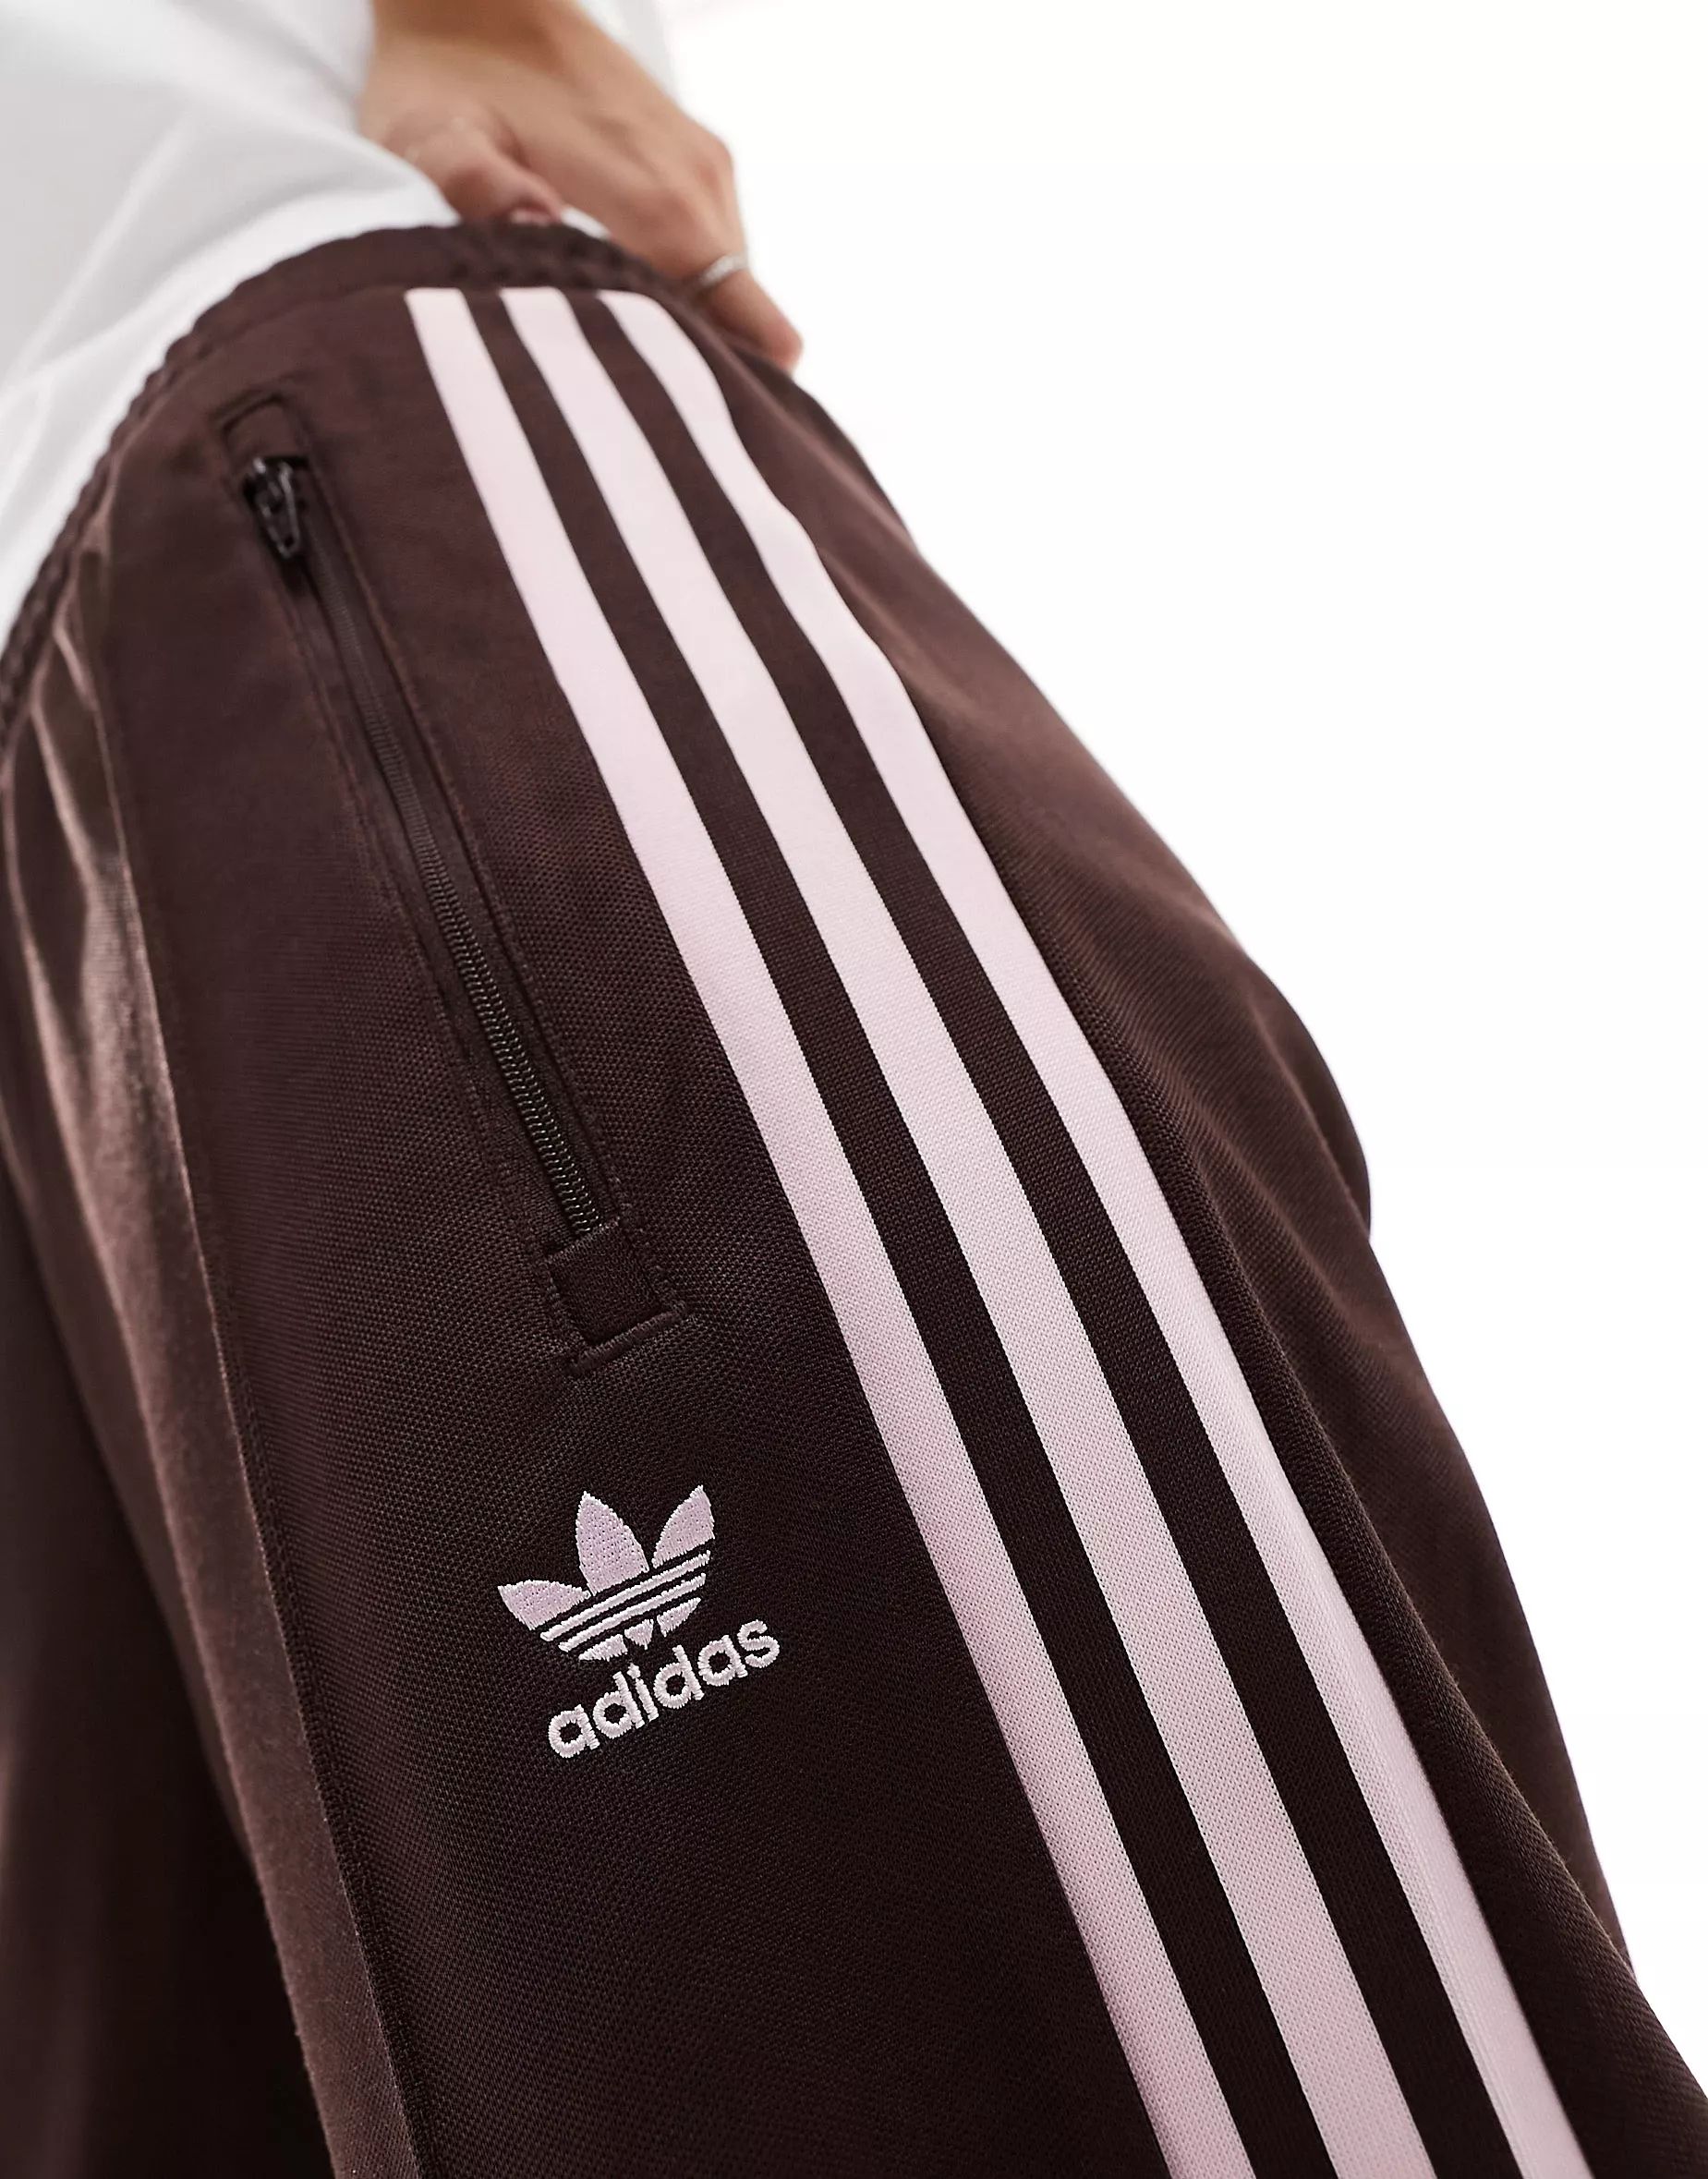 adidas Originals retro beckenbauer track pants in brown and pink | ASOS (Global)